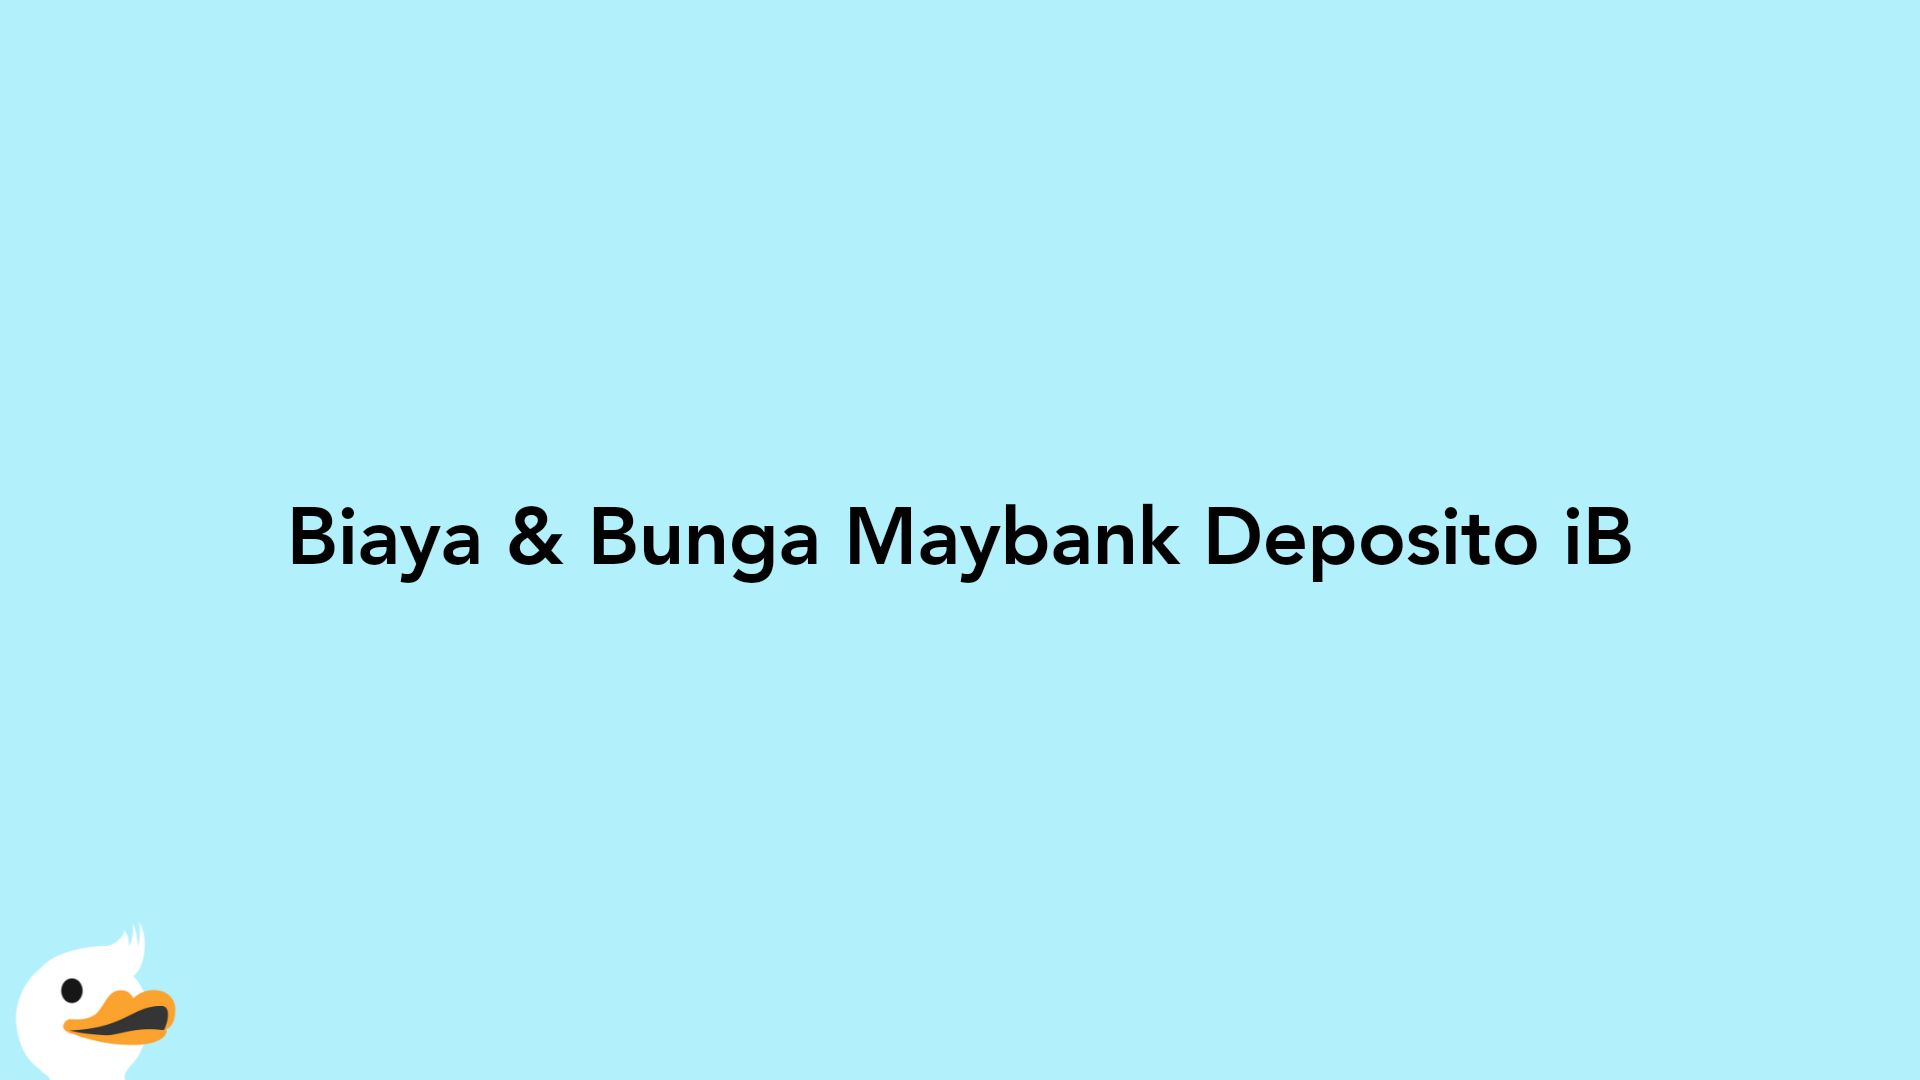 Biaya & Bunga Maybank Deposito iB